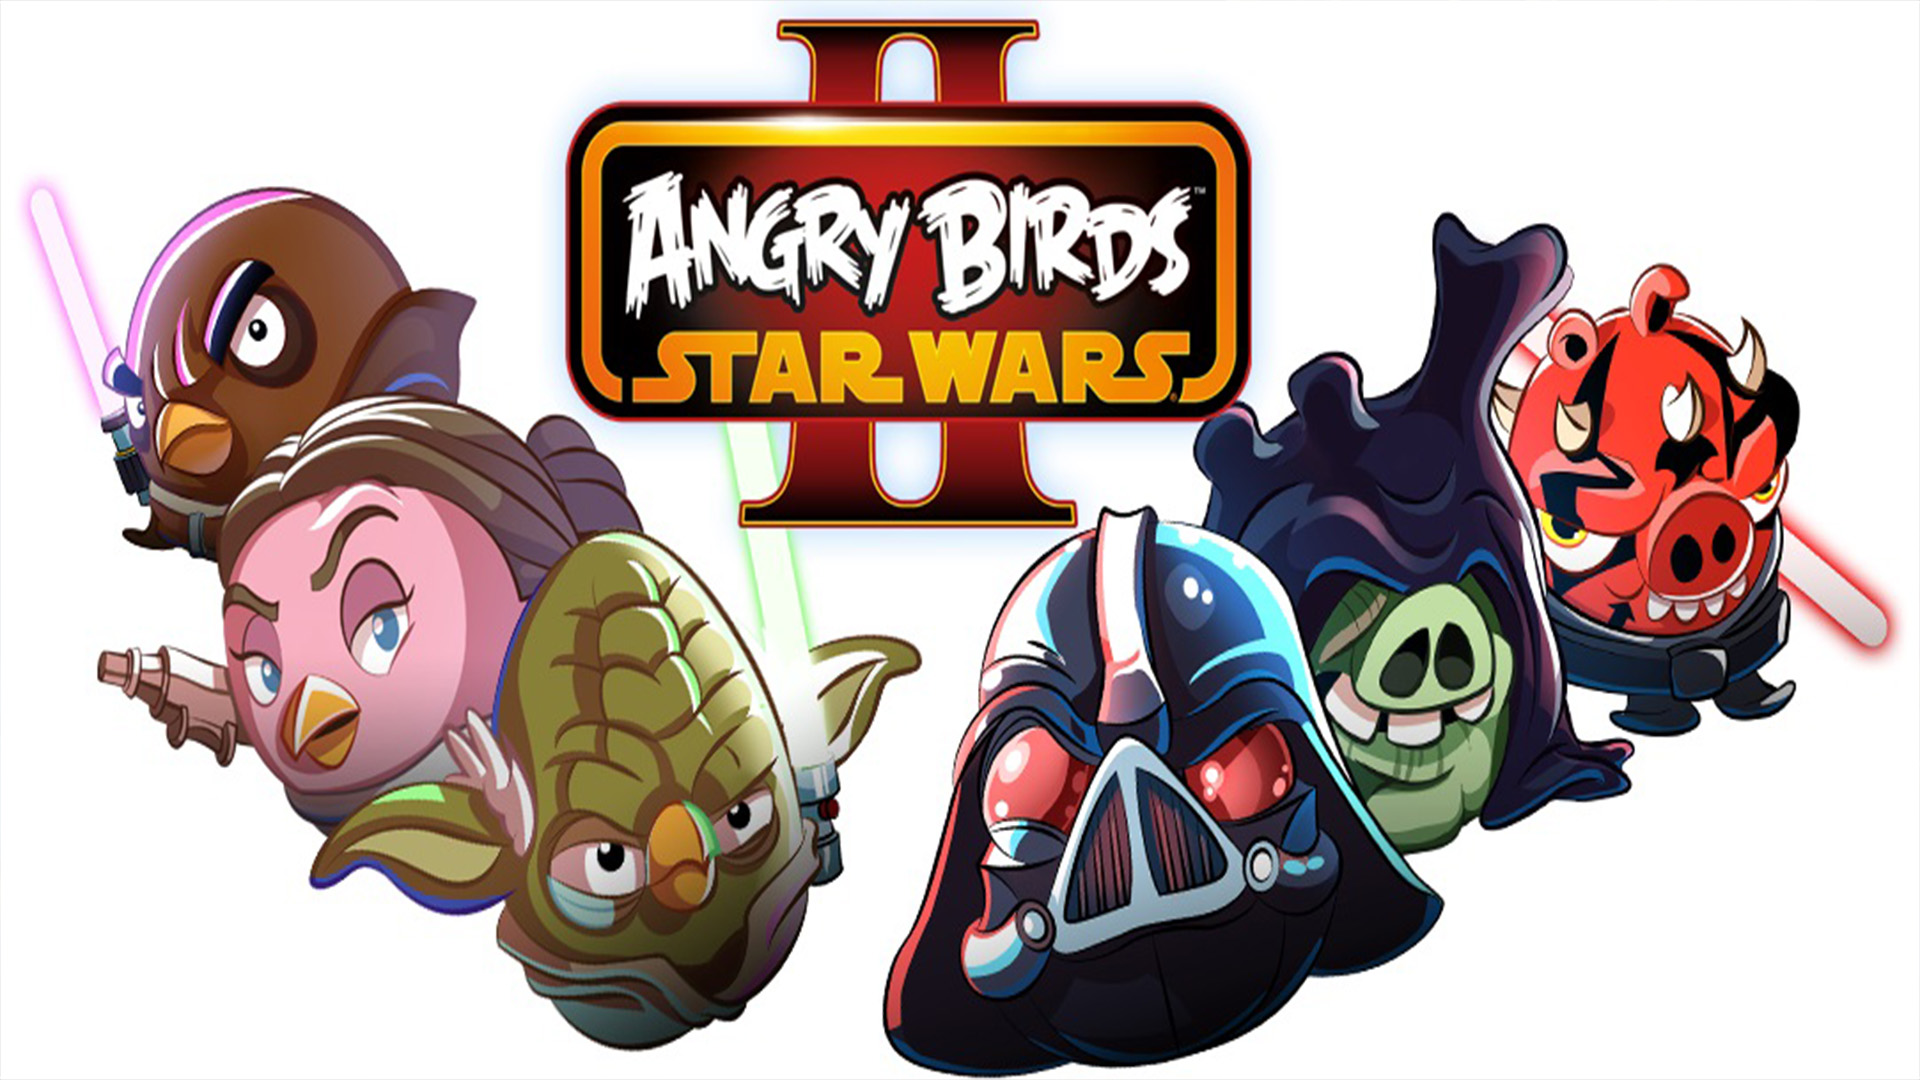 Angry Birds: Star Wars 2 HD Wallpaper